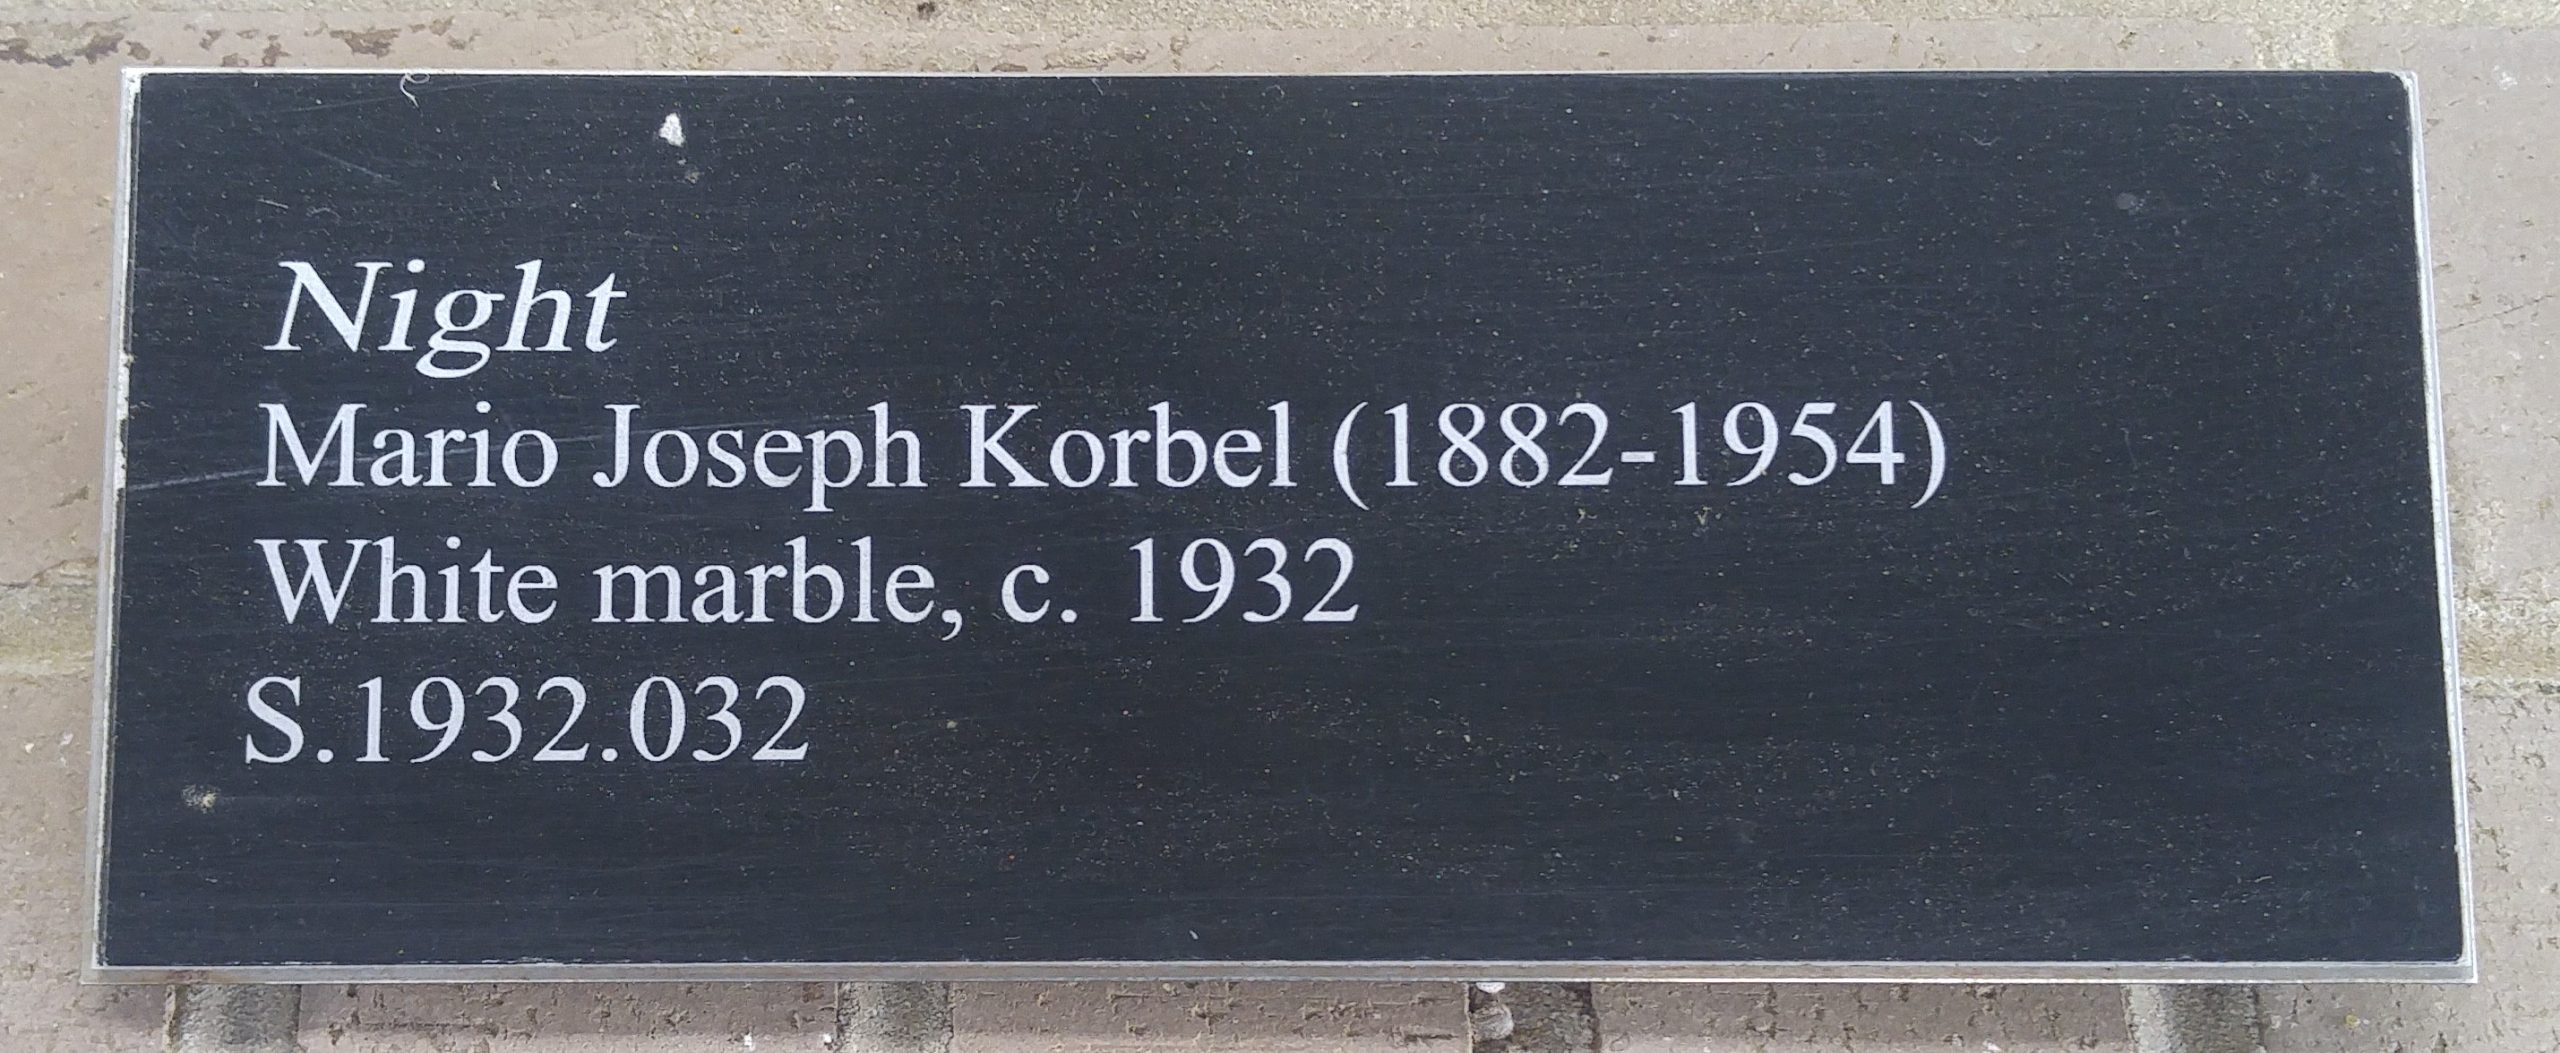 Night by Mario Joseph Korbel (plaque)